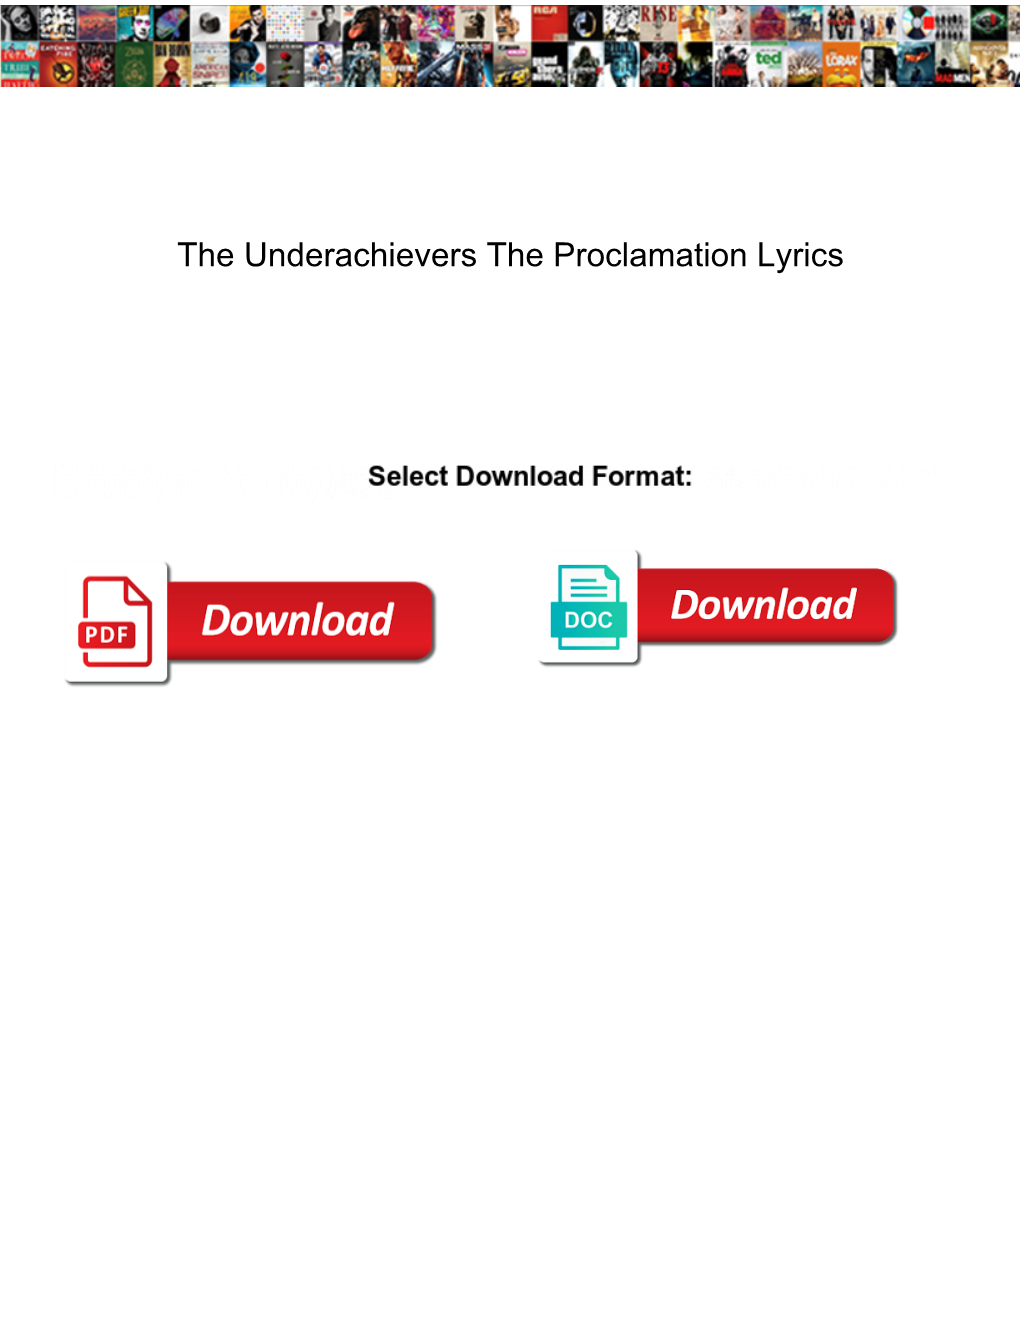 The Underachievers the Proclamation Lyrics